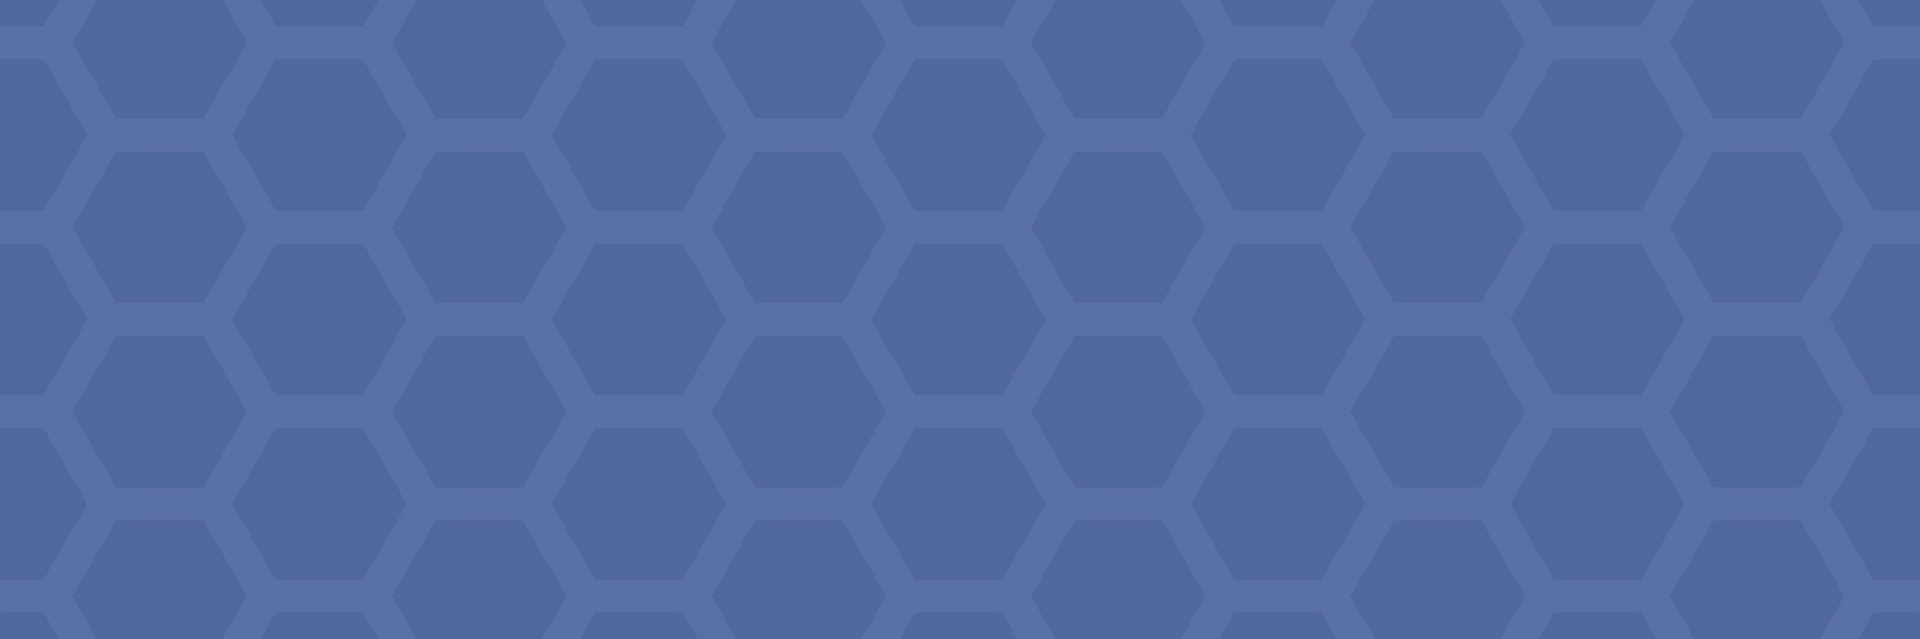 hexagons-blue copy-1